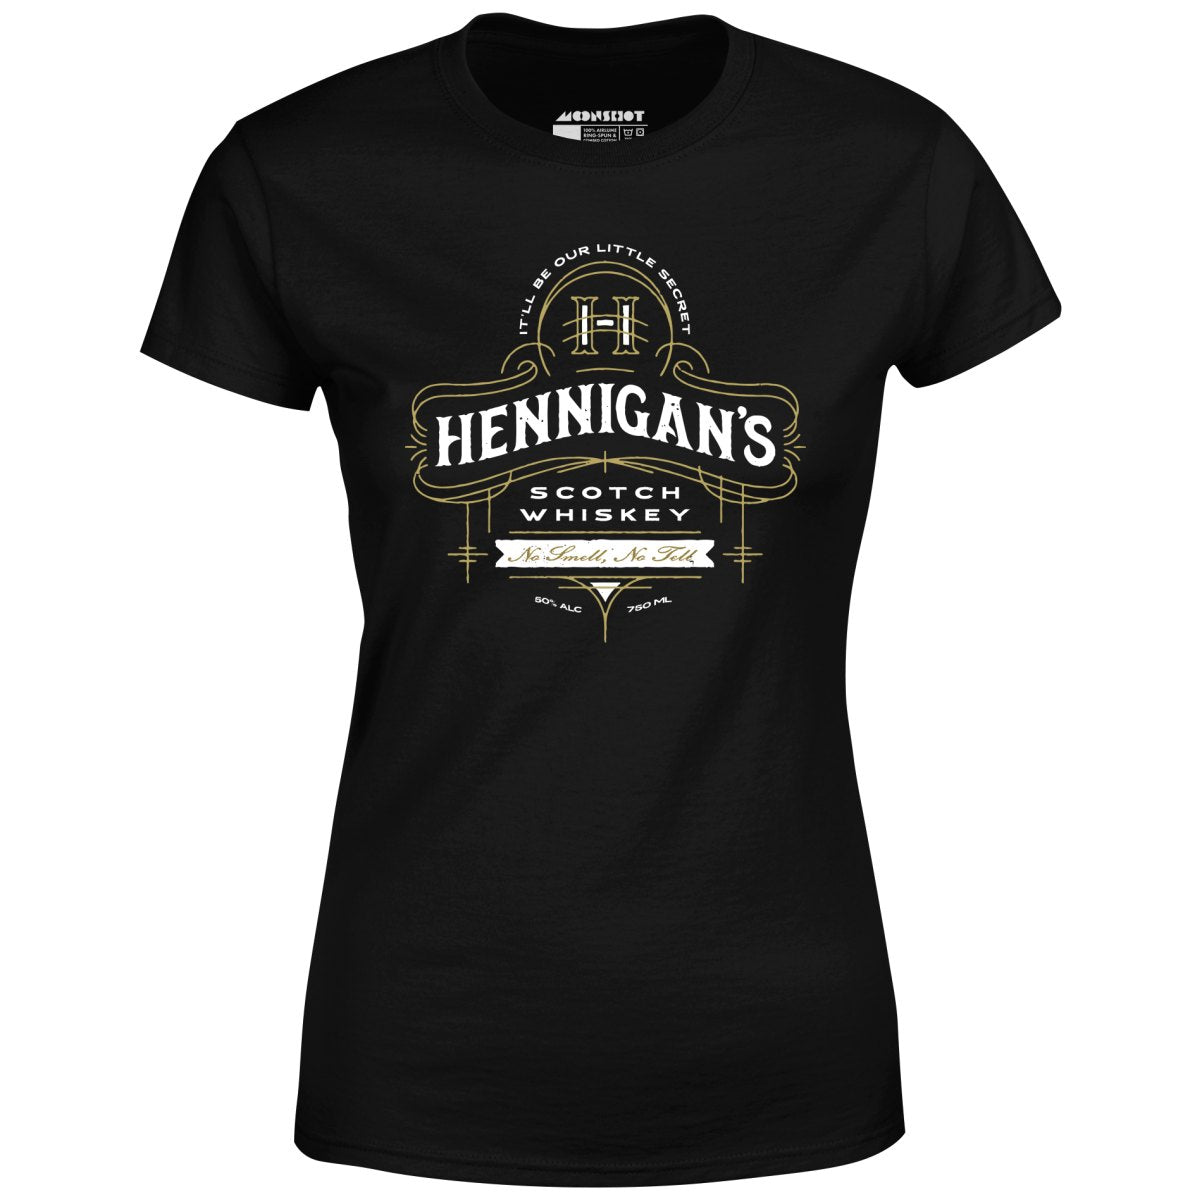 Hennigan's Scotch Whiskey - Women's T-Shirt